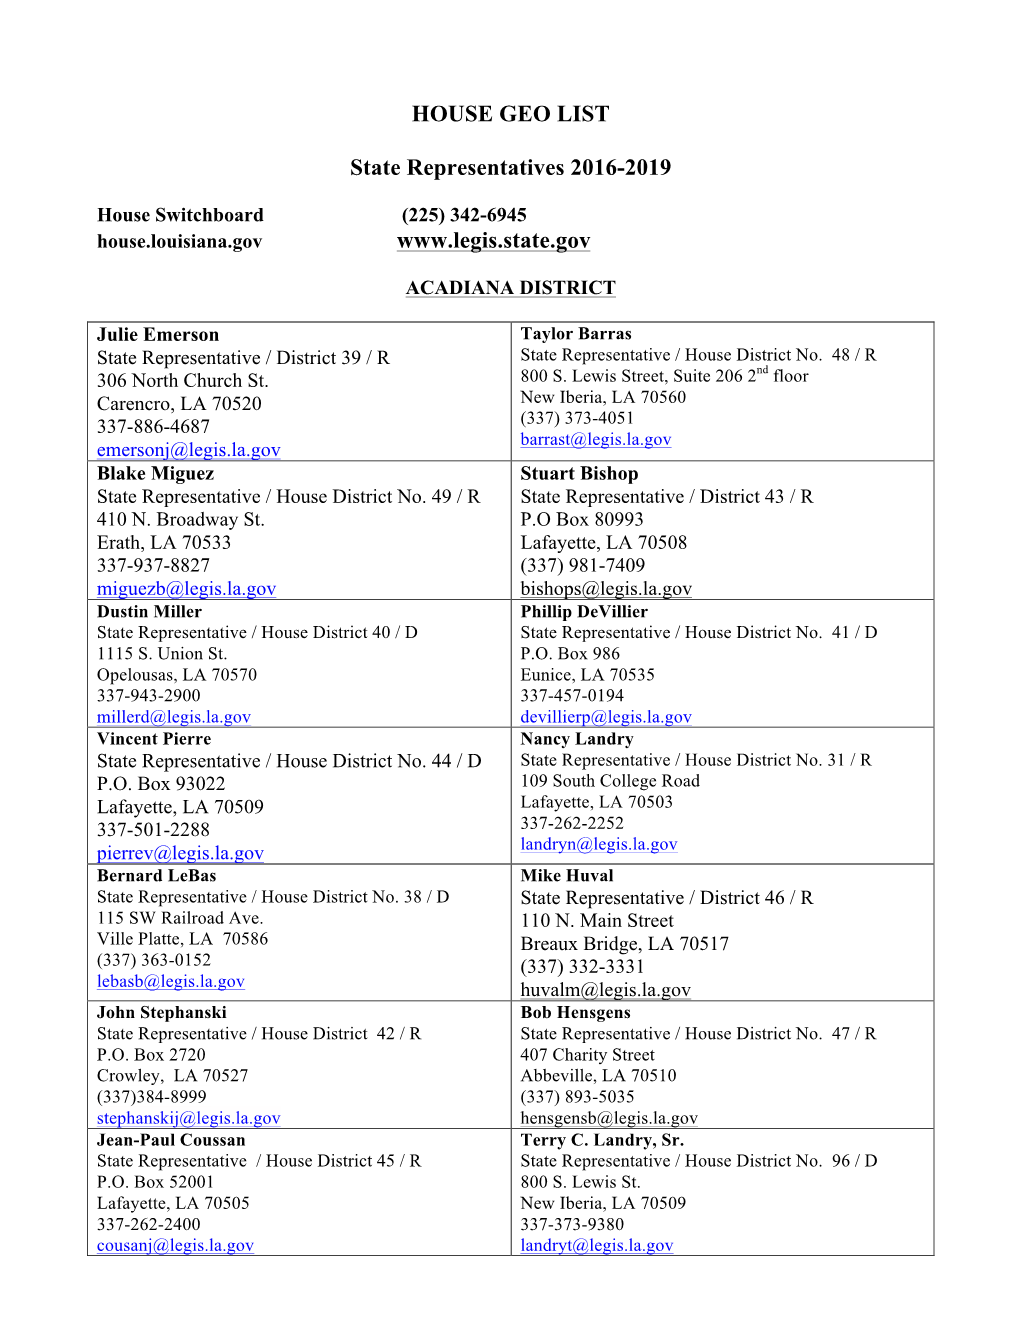 HOUSE GEO LIST State Representatives 2016-2019